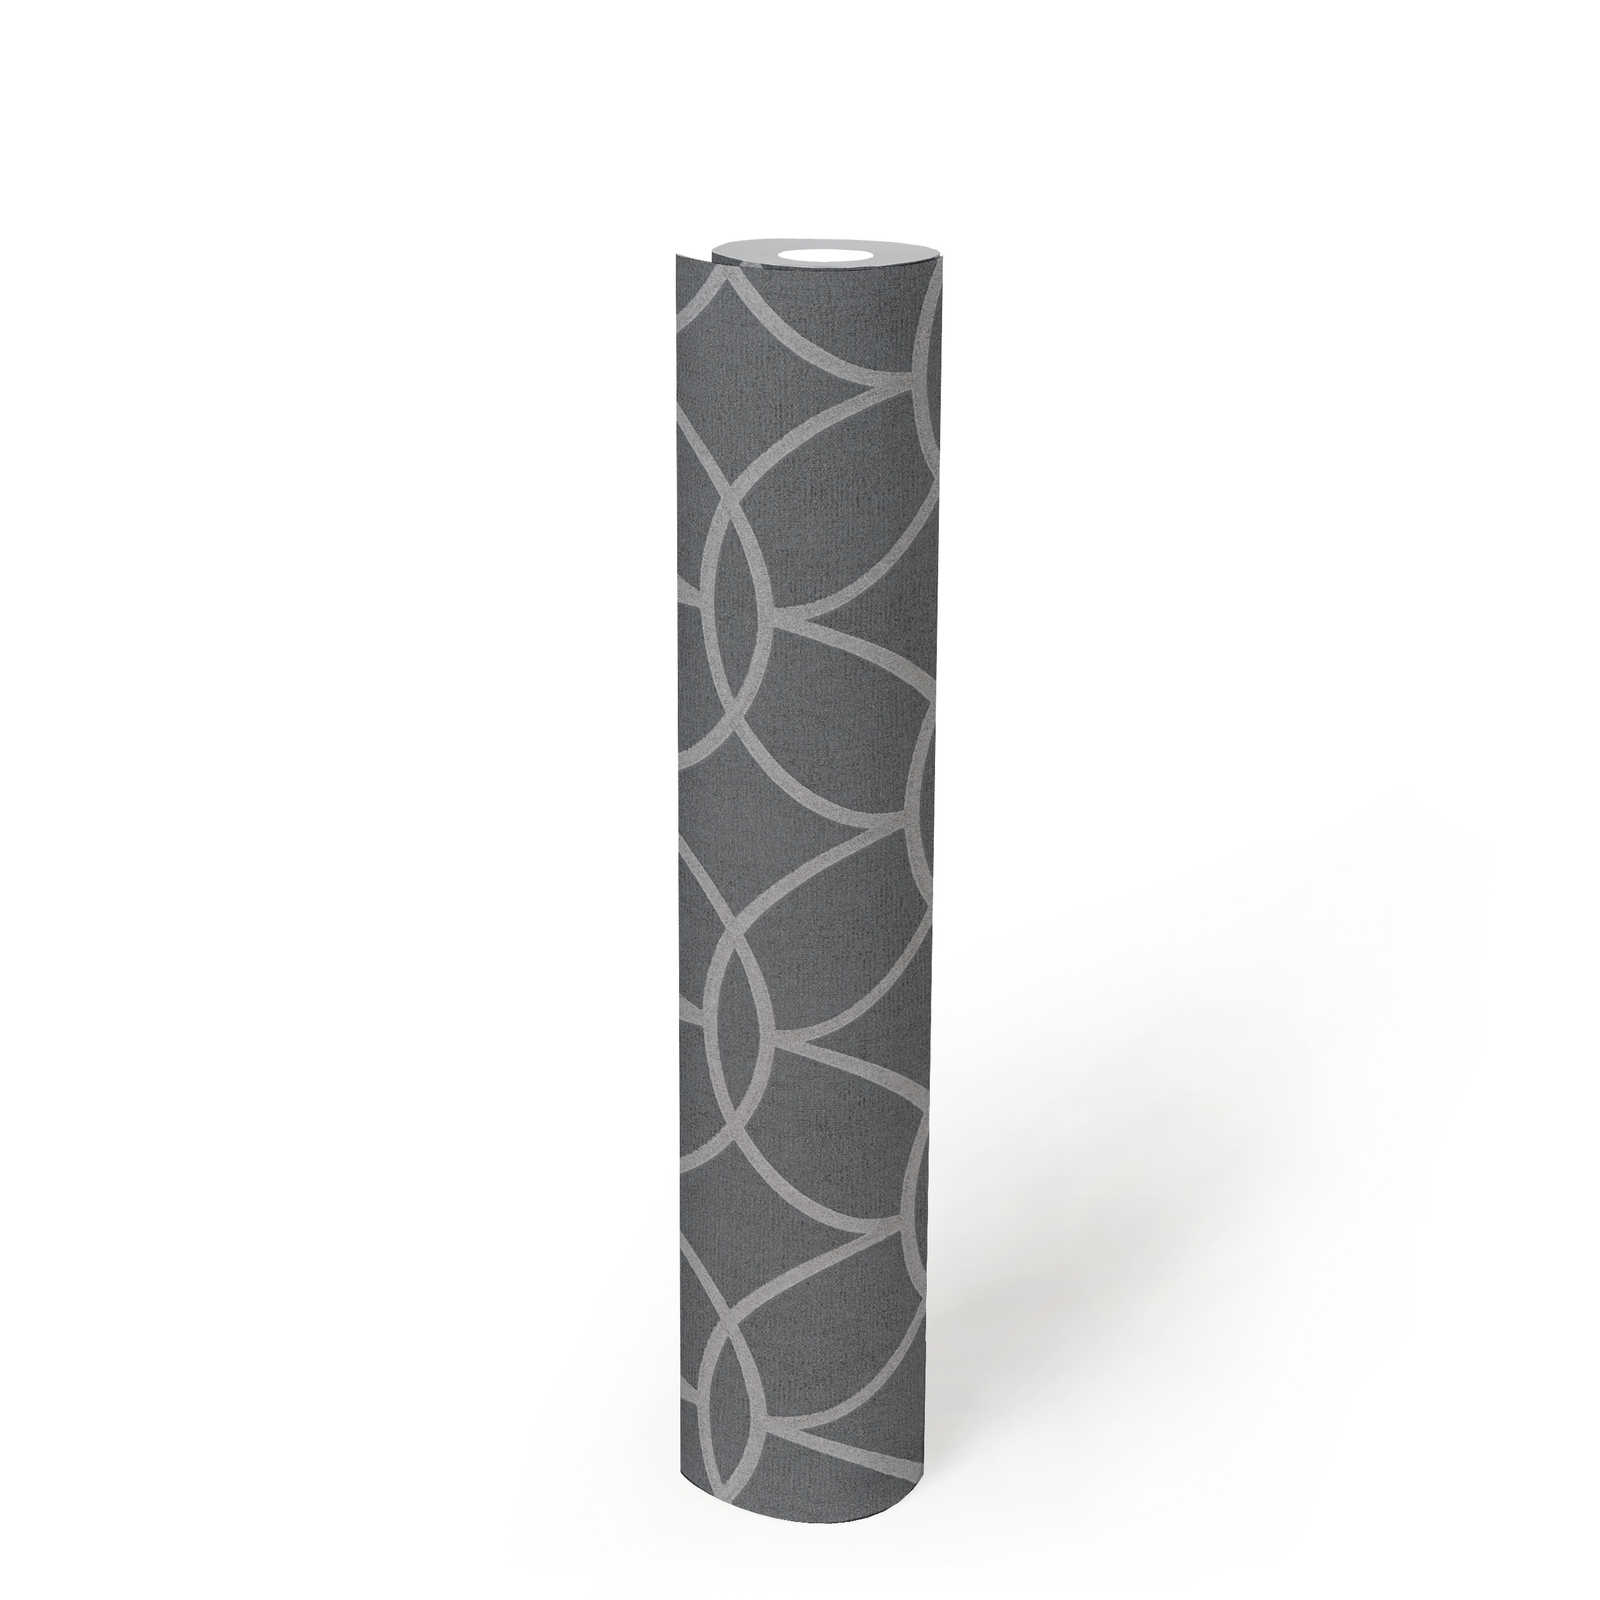             Graue Mustertapete mit silber Metallic-Muster & Schimmer-Effekt – Grau, Metallic
        